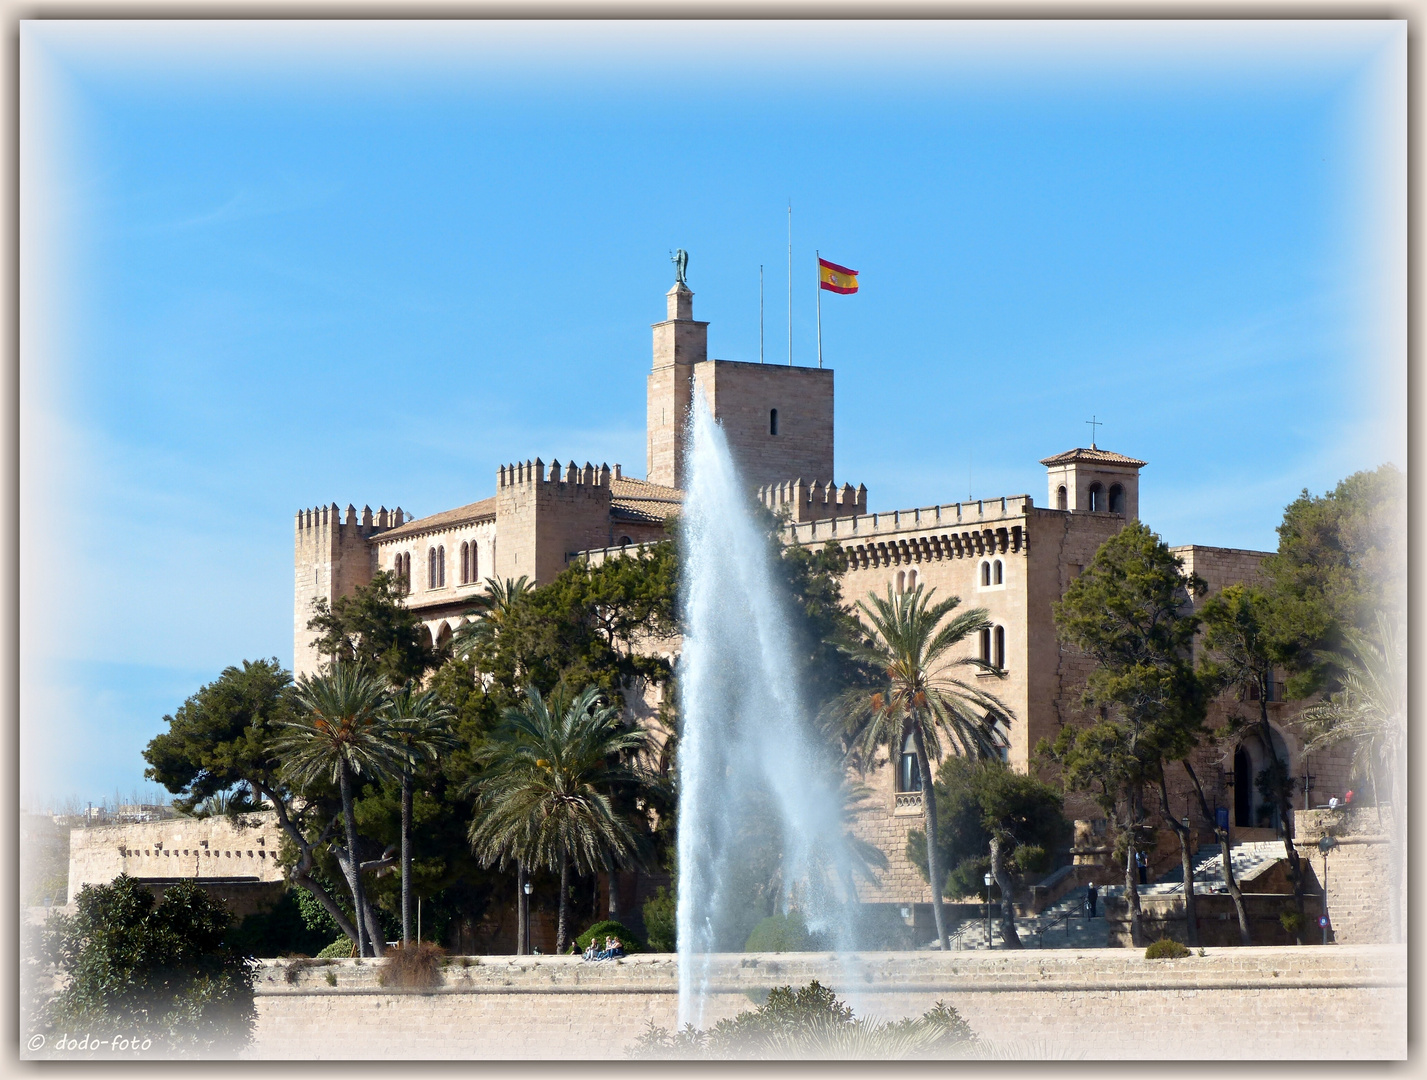 Palau Reial de l'Almudaina in Palma de Mallorca